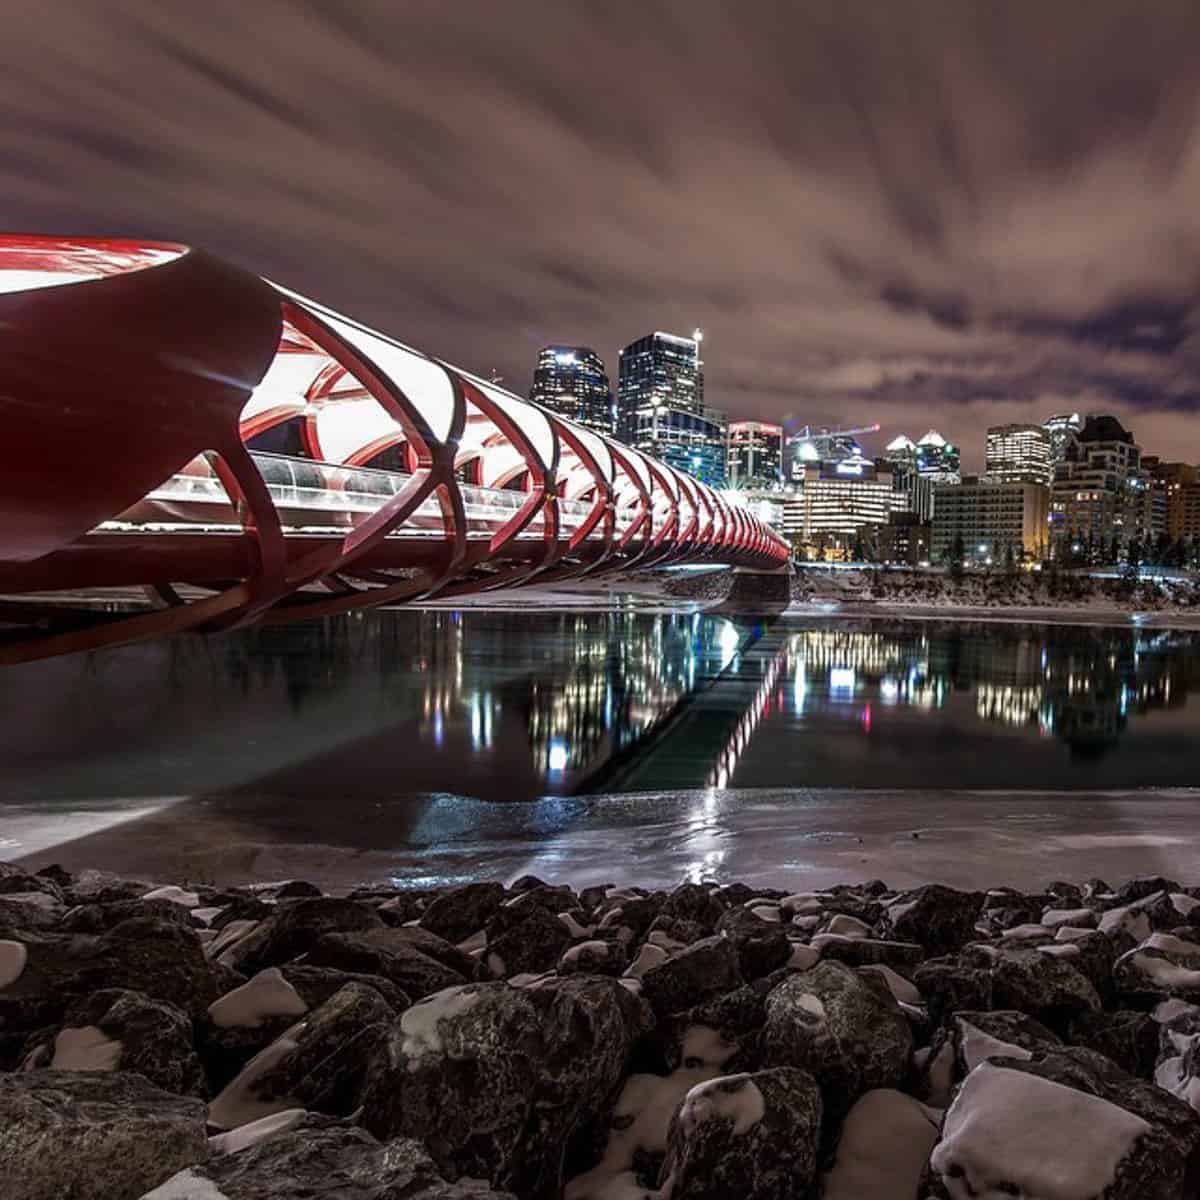 Calgary at Night